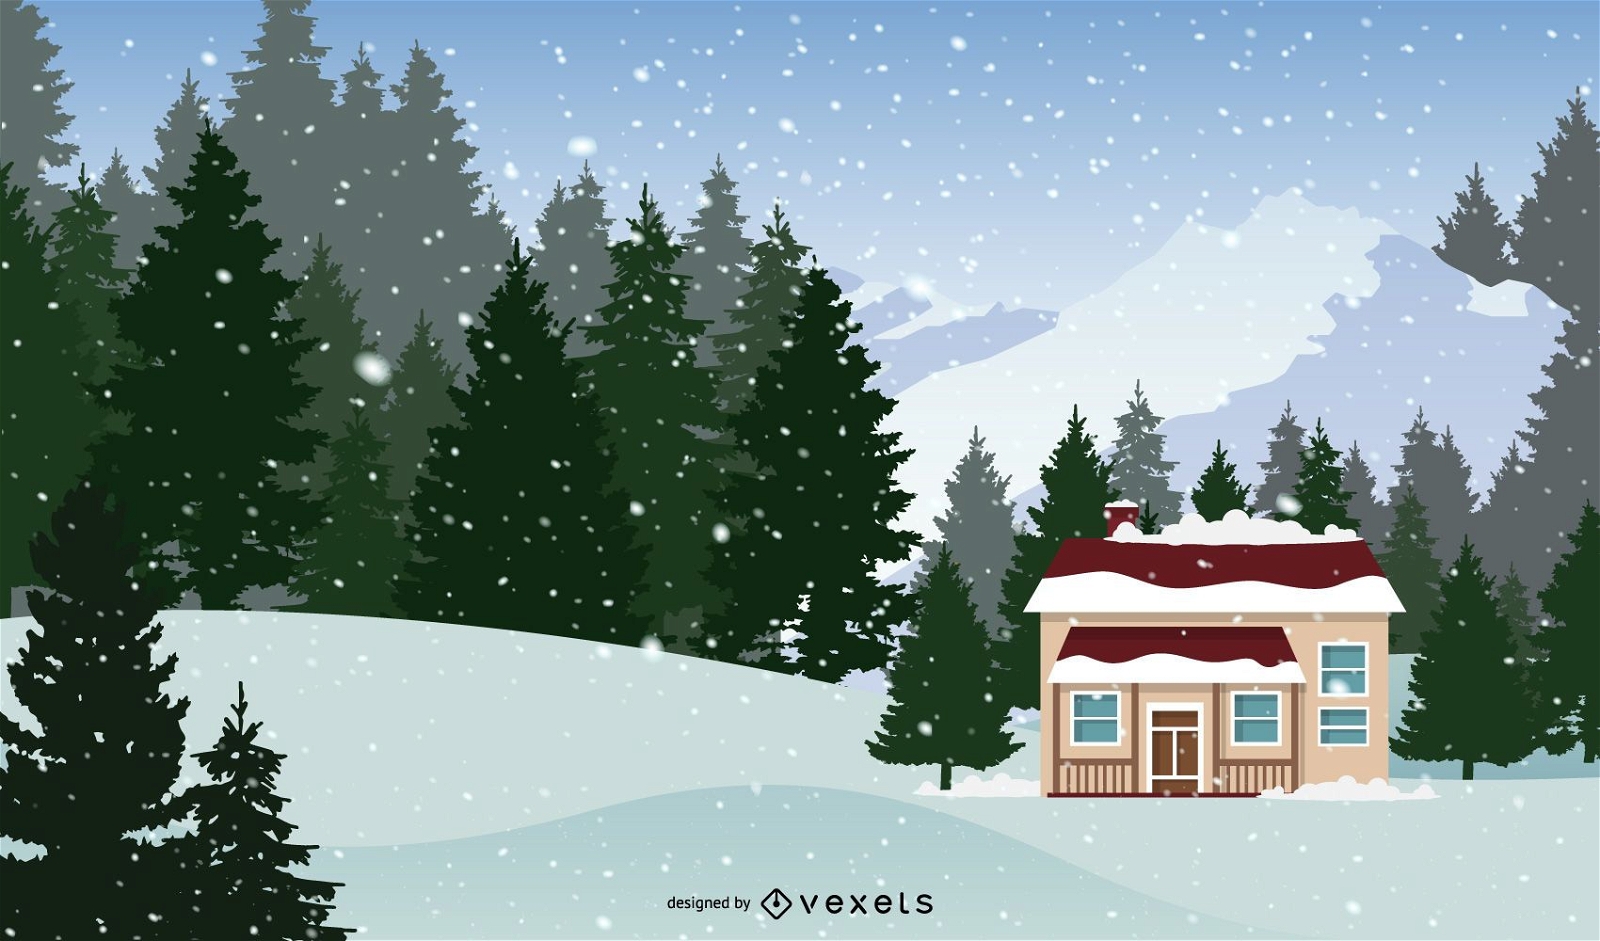 Snowy Day Christmas Card Design